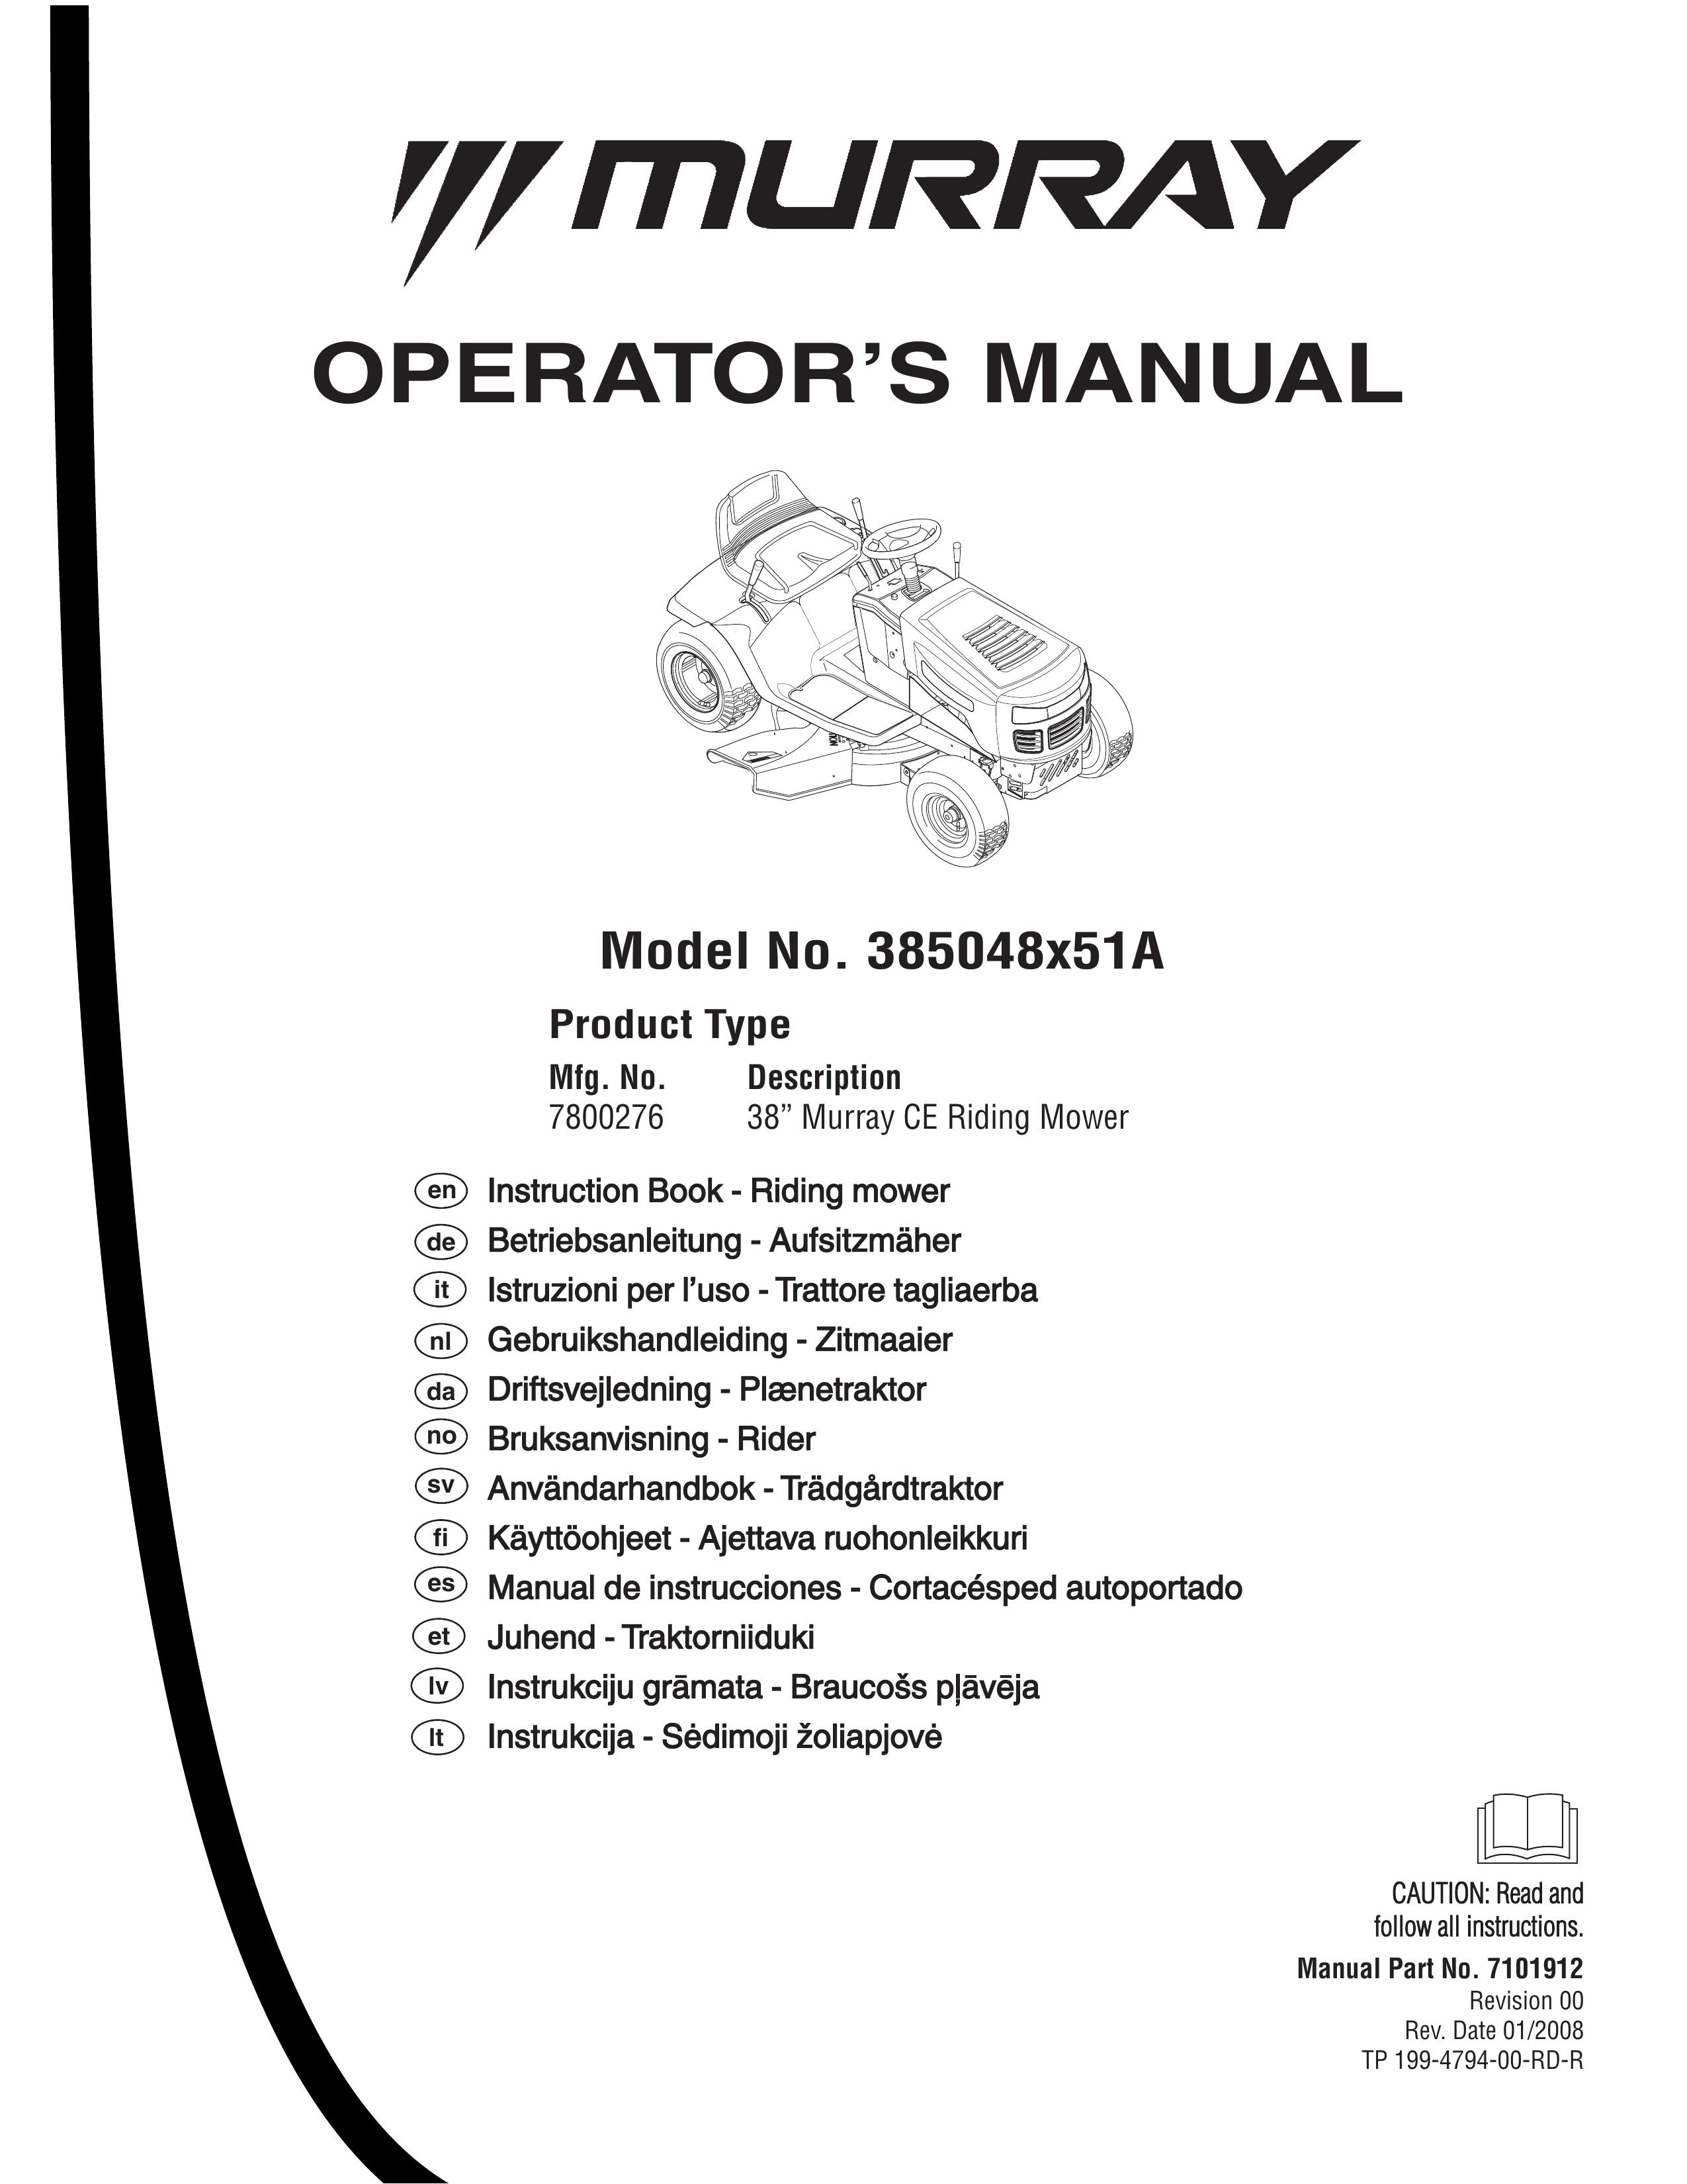 Murray 385048x51A Lawn Mower User Manual